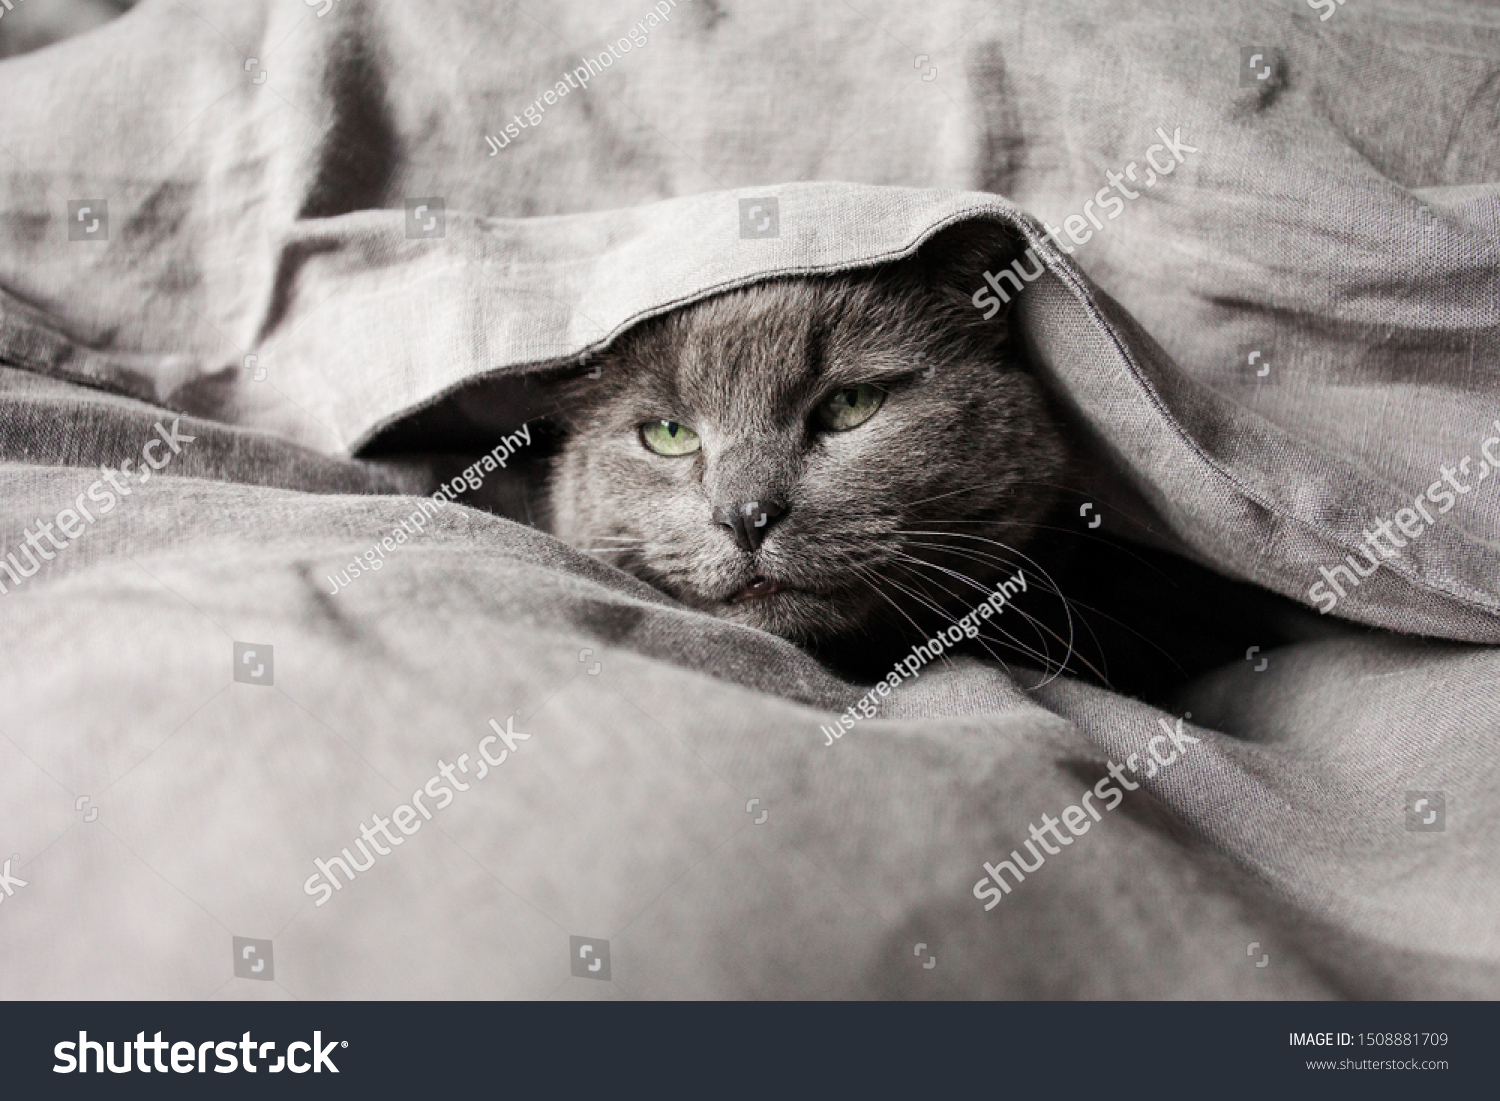 Grey cat in grey linen bed sheets #1508881709